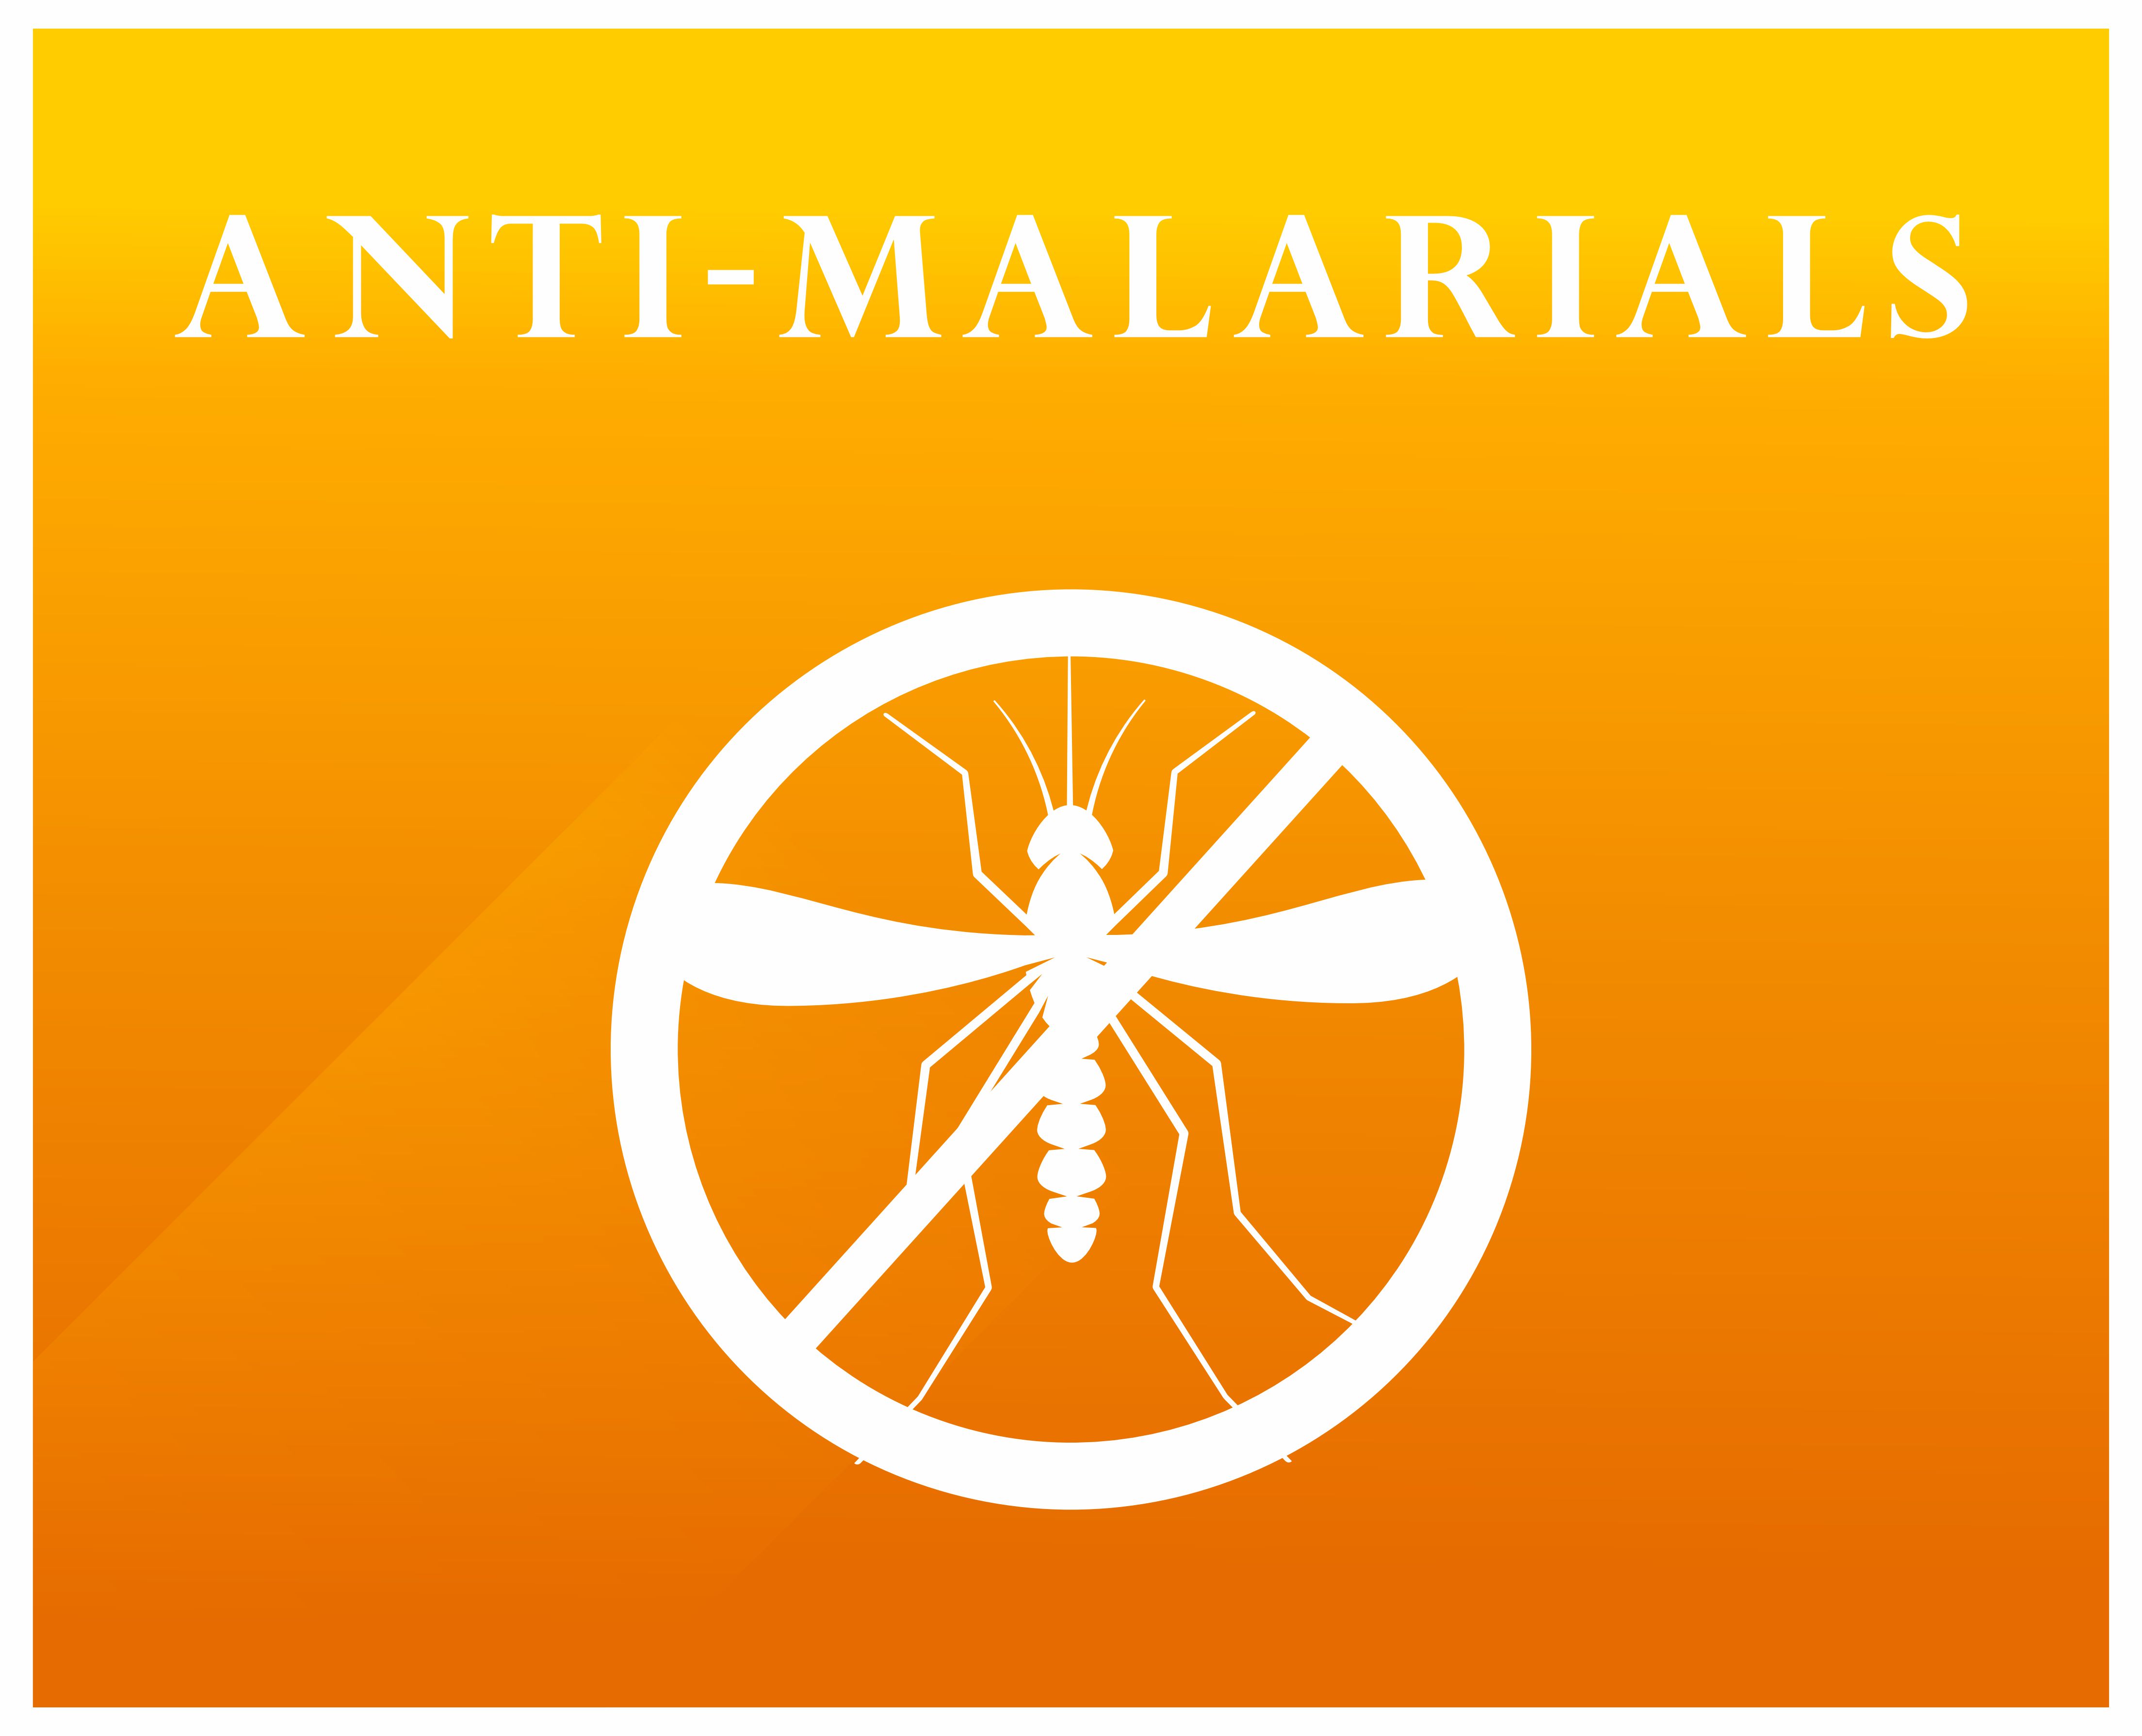 Anti-Malarials